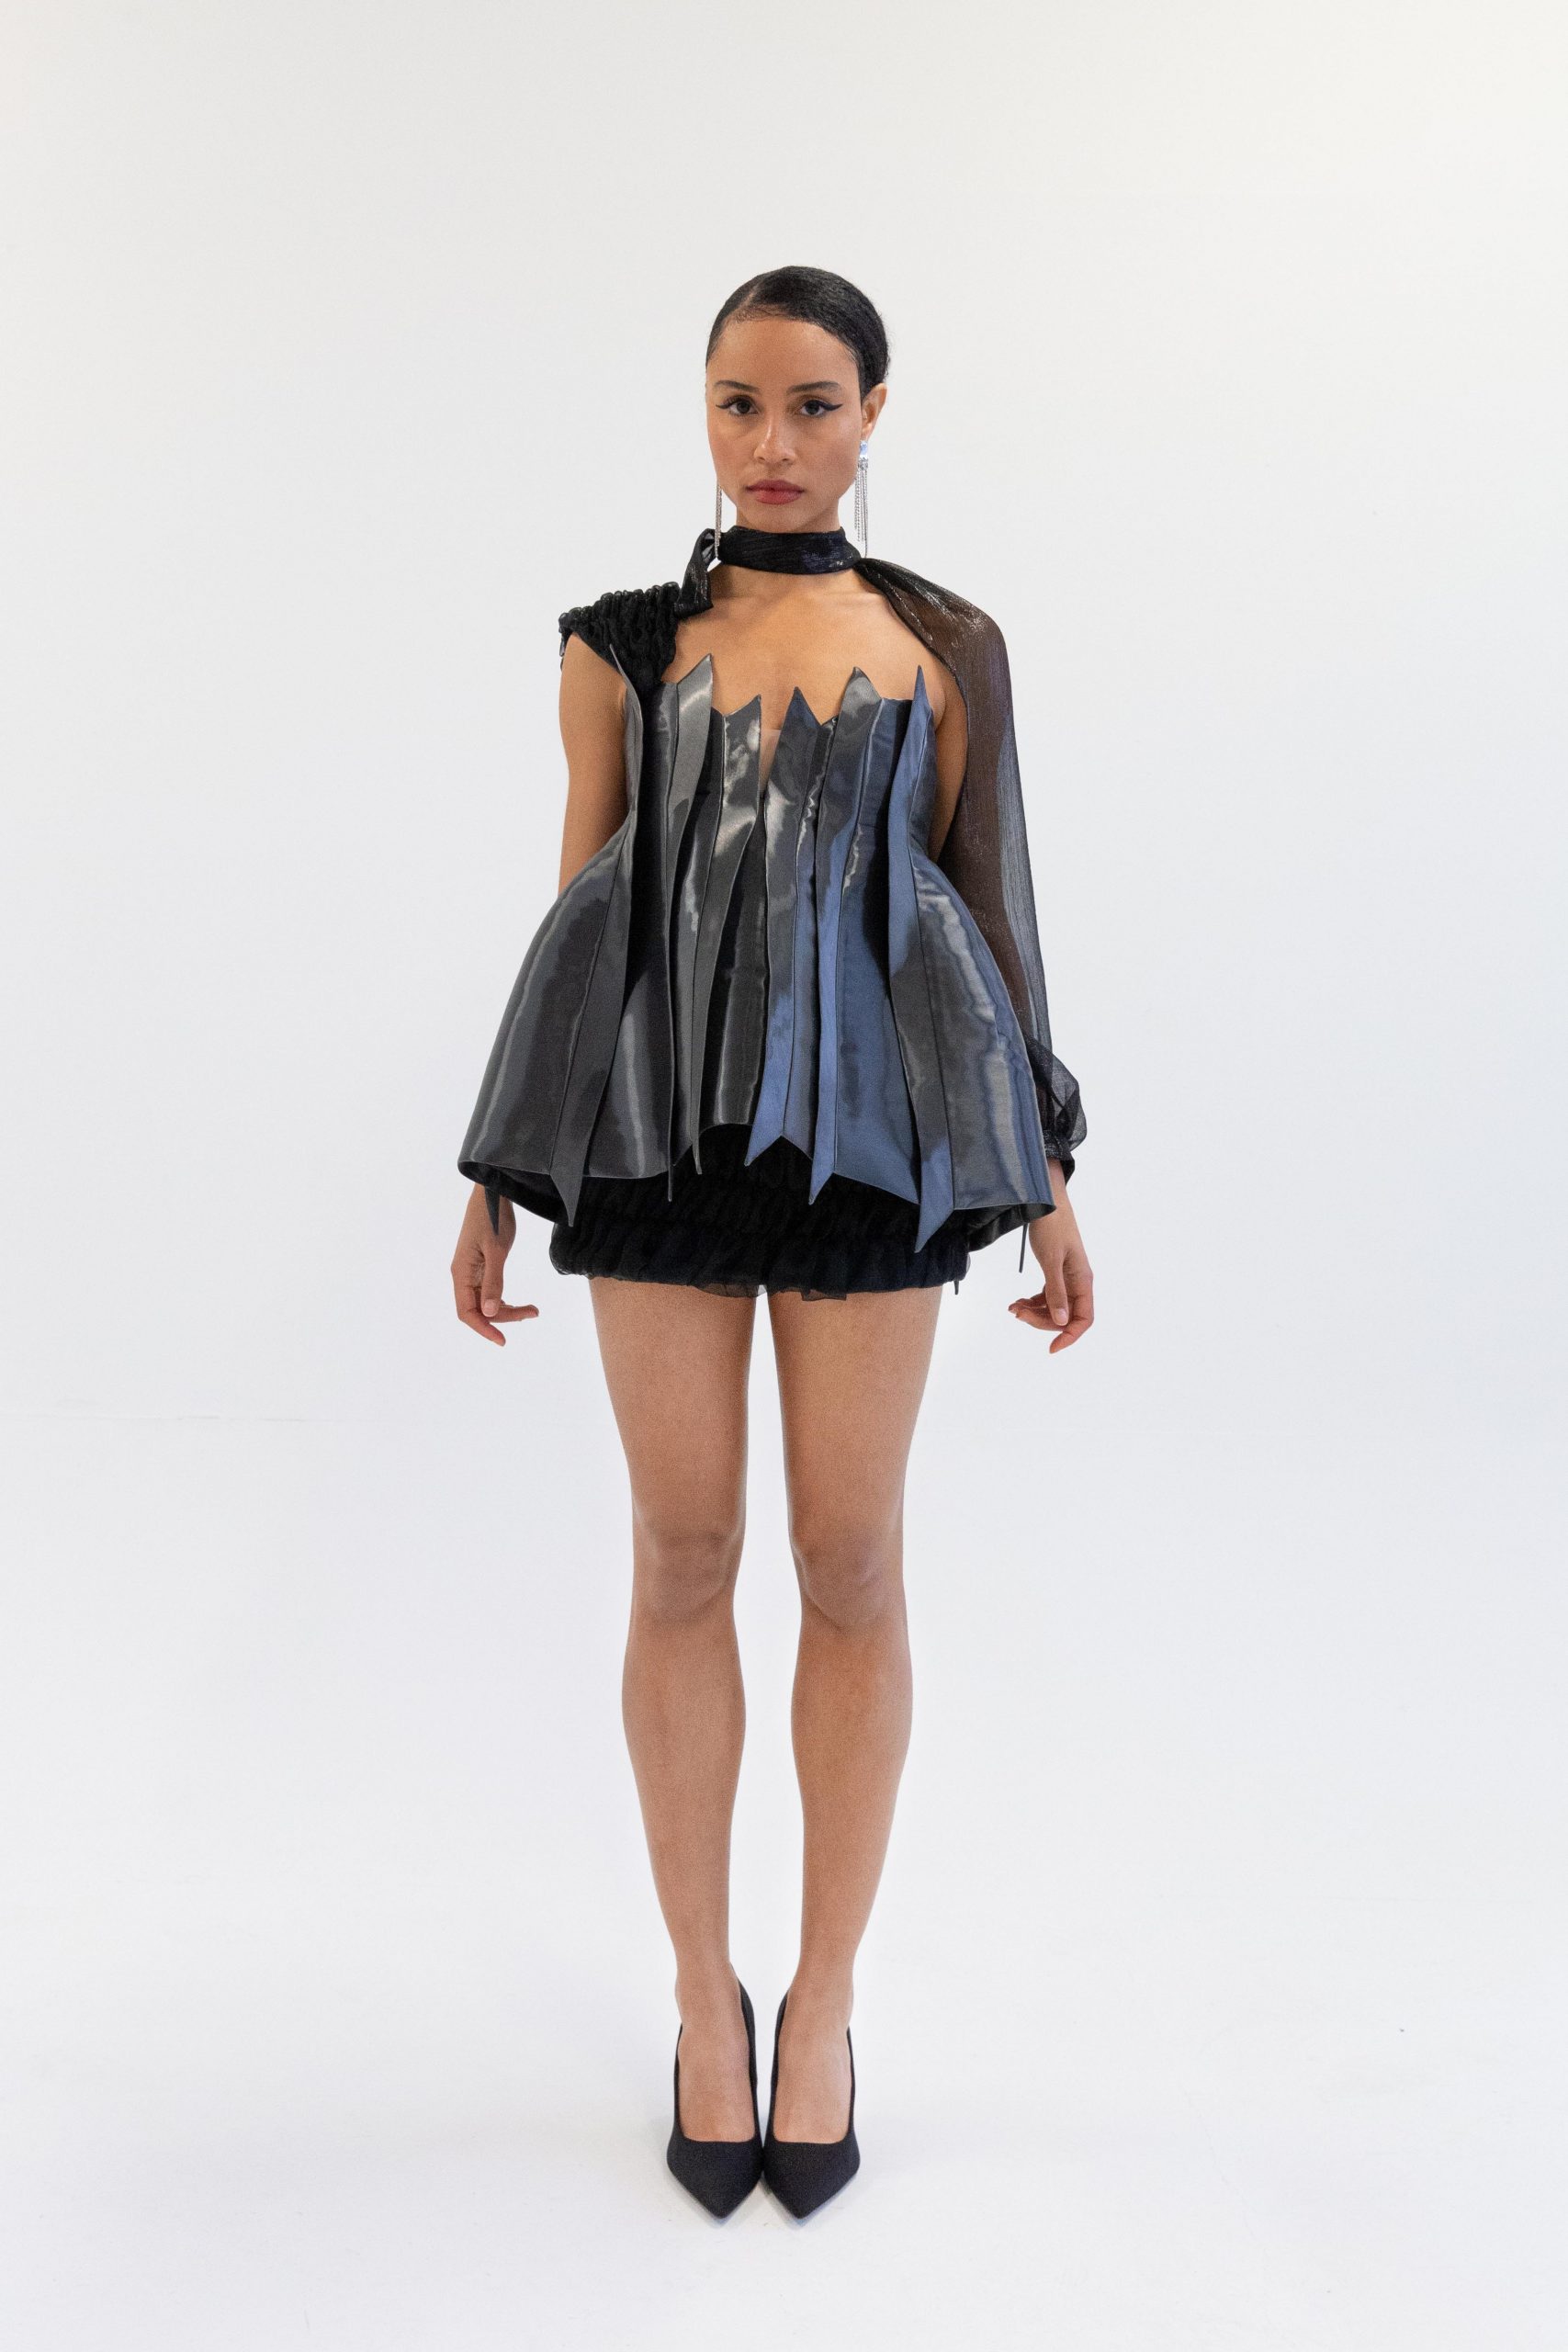 Futuristic metallic liquid dress